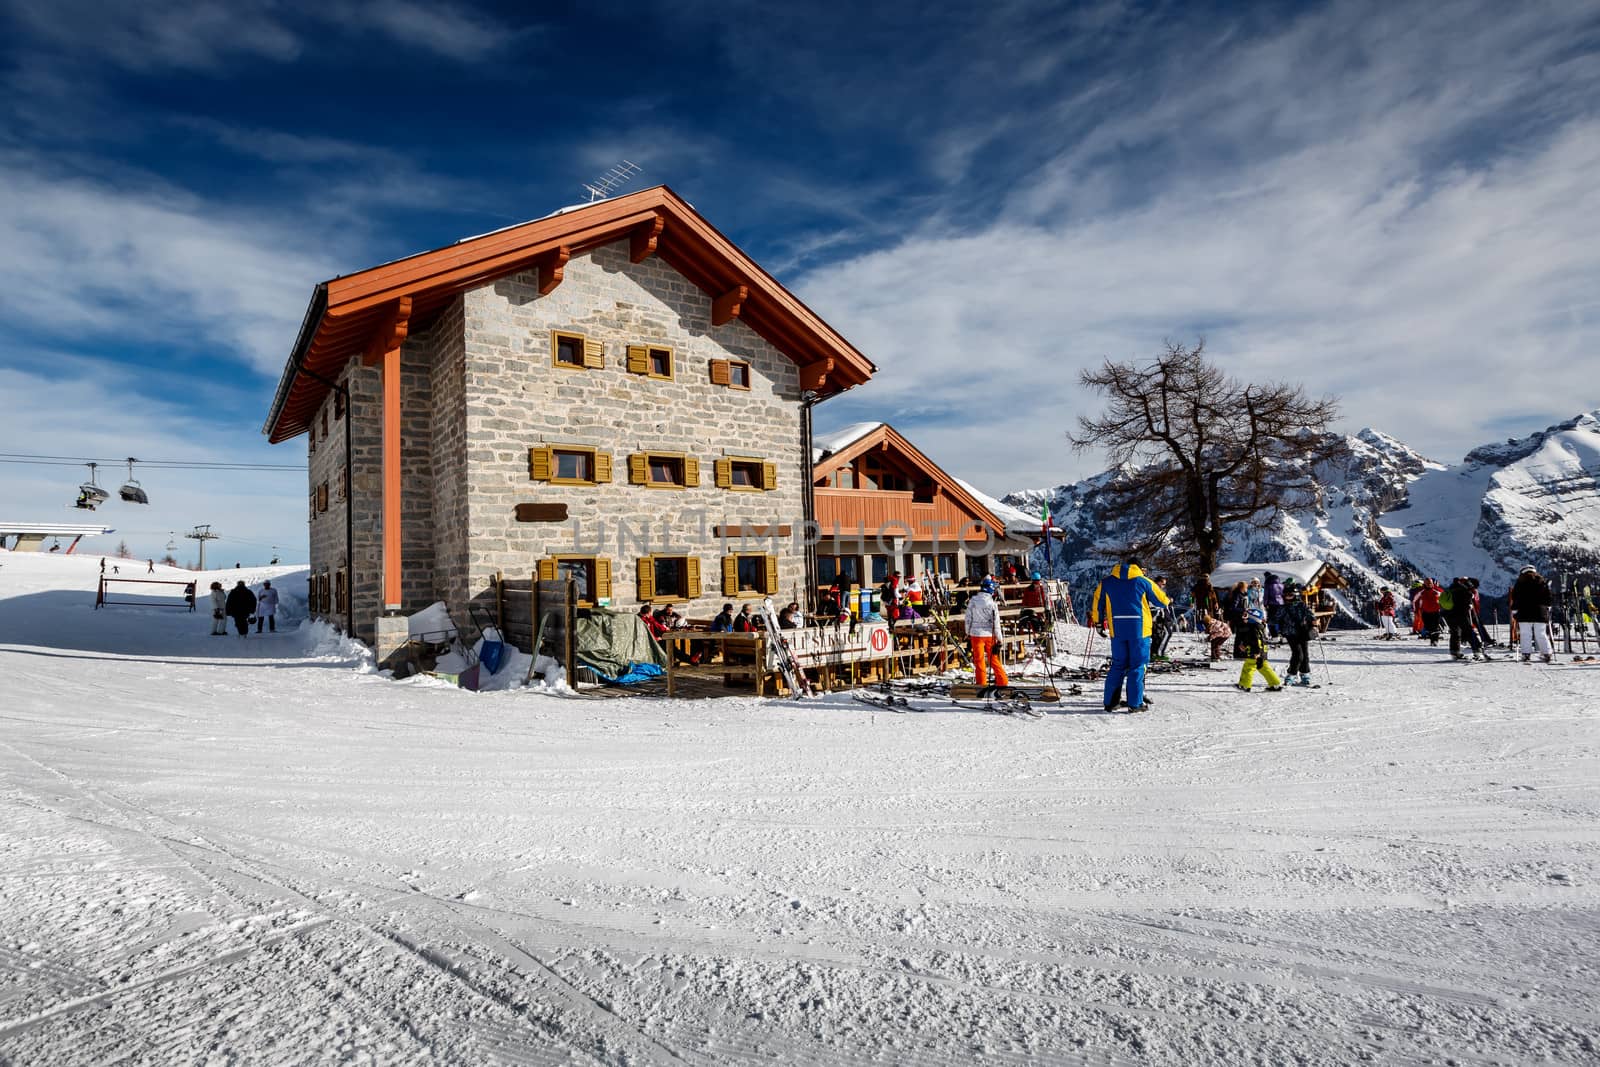 Ski Restaurant in Madonna di Campiglio Ski Resort, Italian Alps, Italy